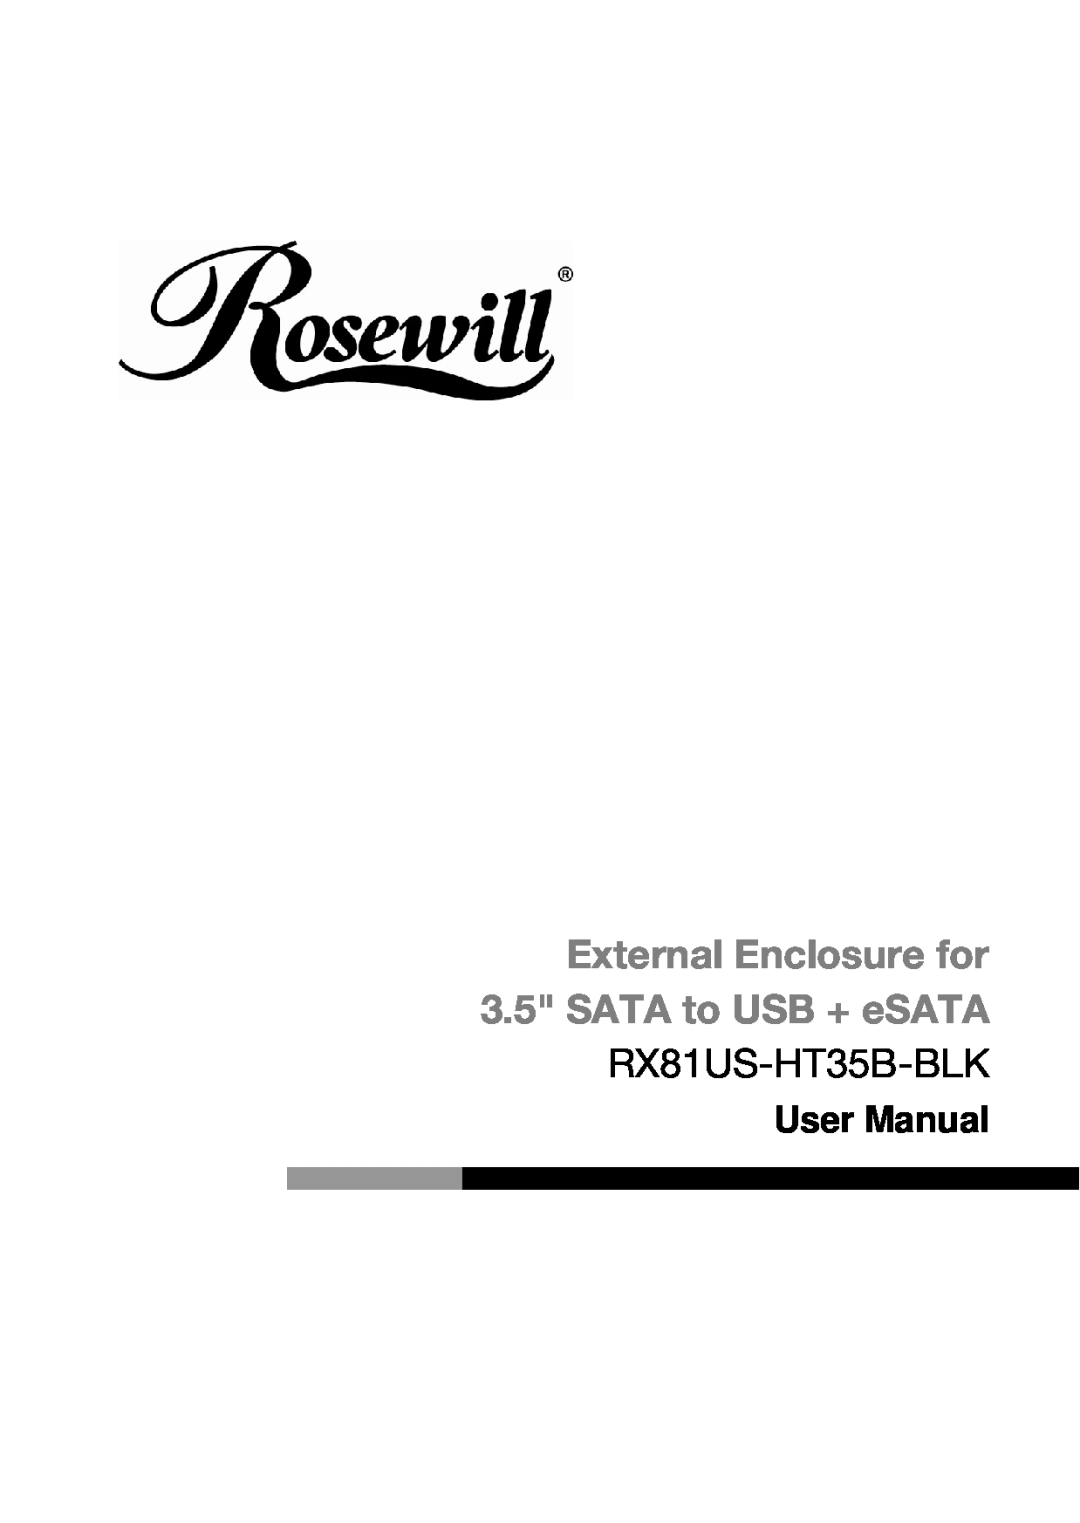 Rosewill RX81US-HT35B-BLK user manual External Enclosure for 3.5 SATA to USB + eSATA, User Manual 